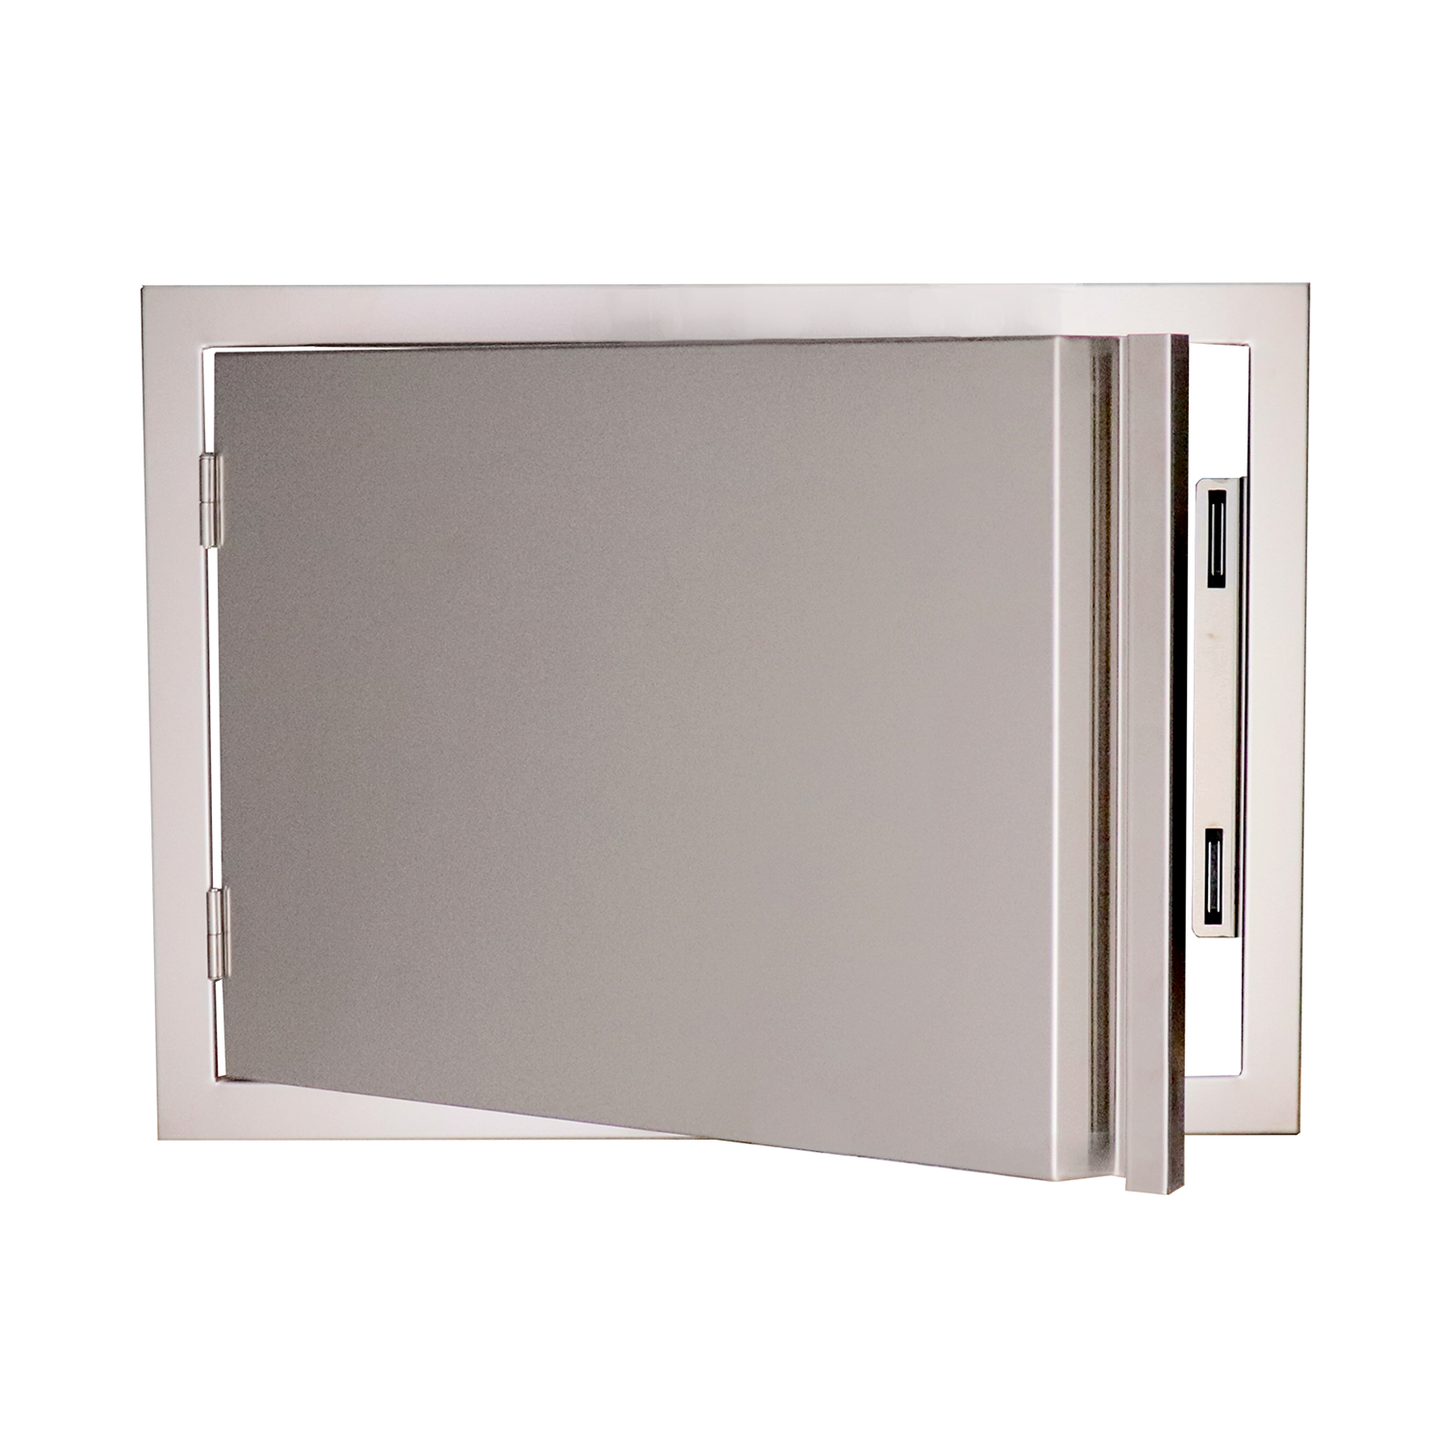 RCS Valiant Series 27-Inch Stainless Steel Horizontal Single Access Door - VDH1